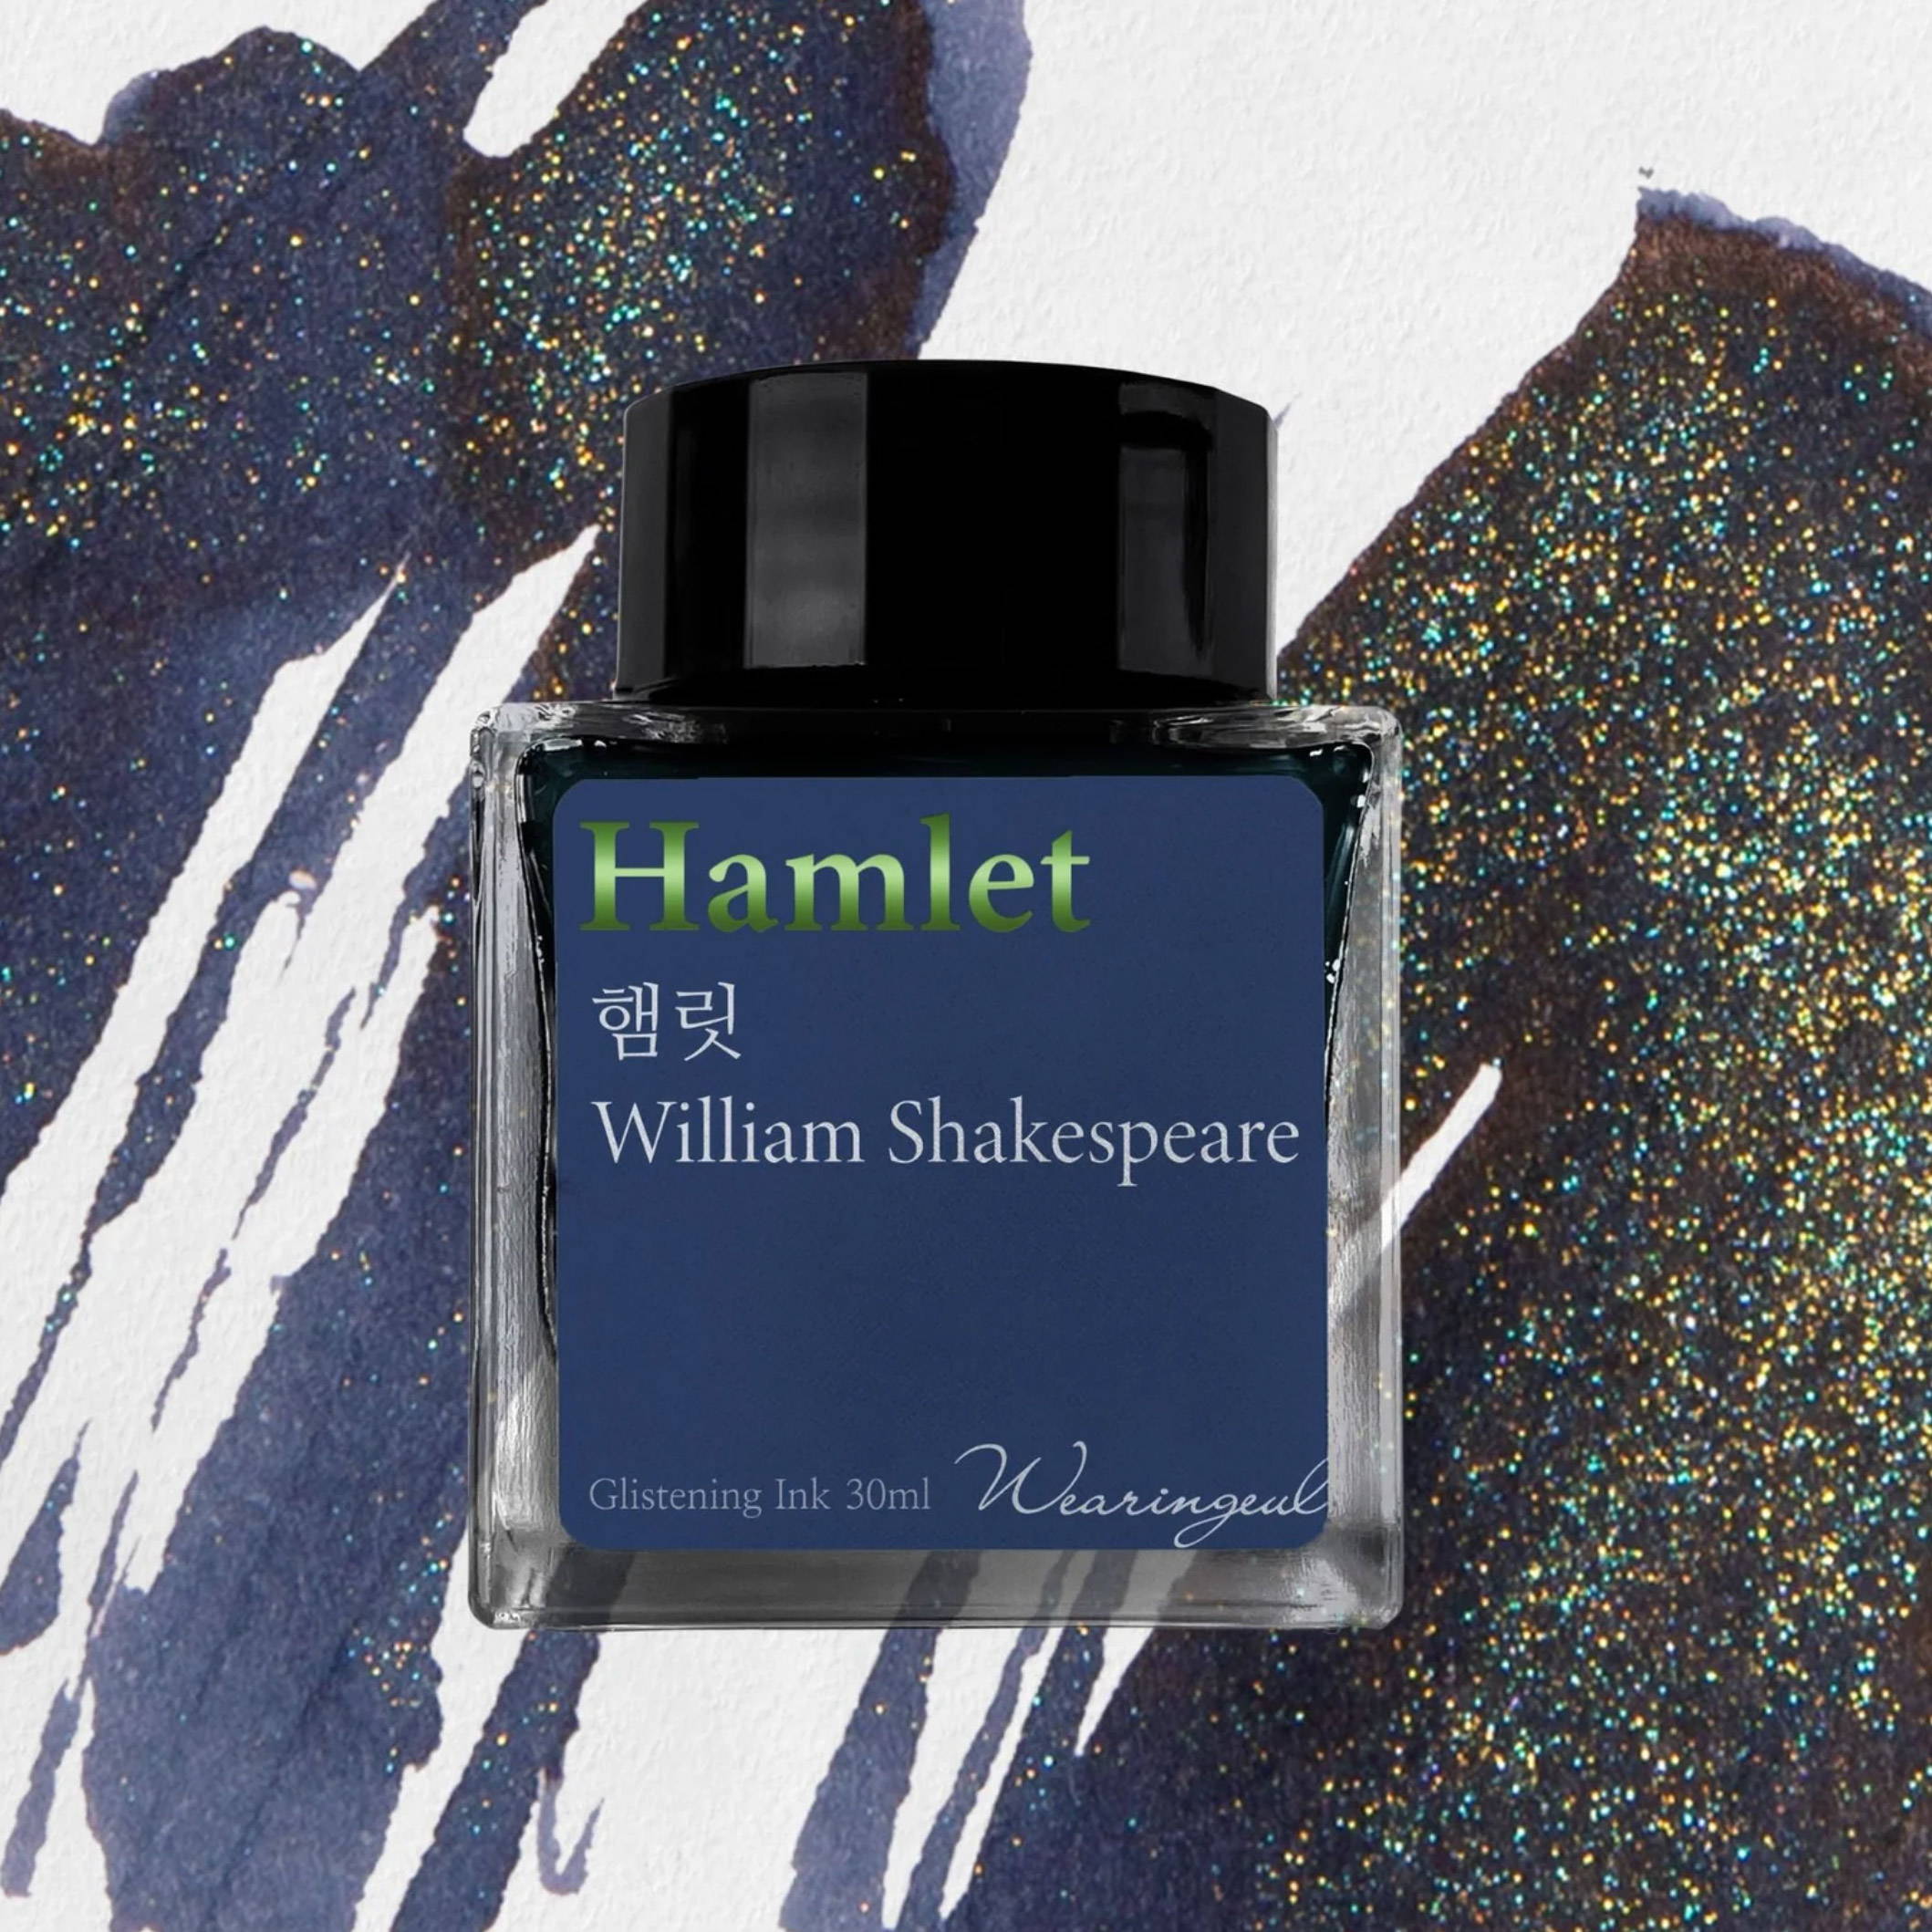 Wearingeul William Sheakspeare Hamlet fountain pen ink with shimmer